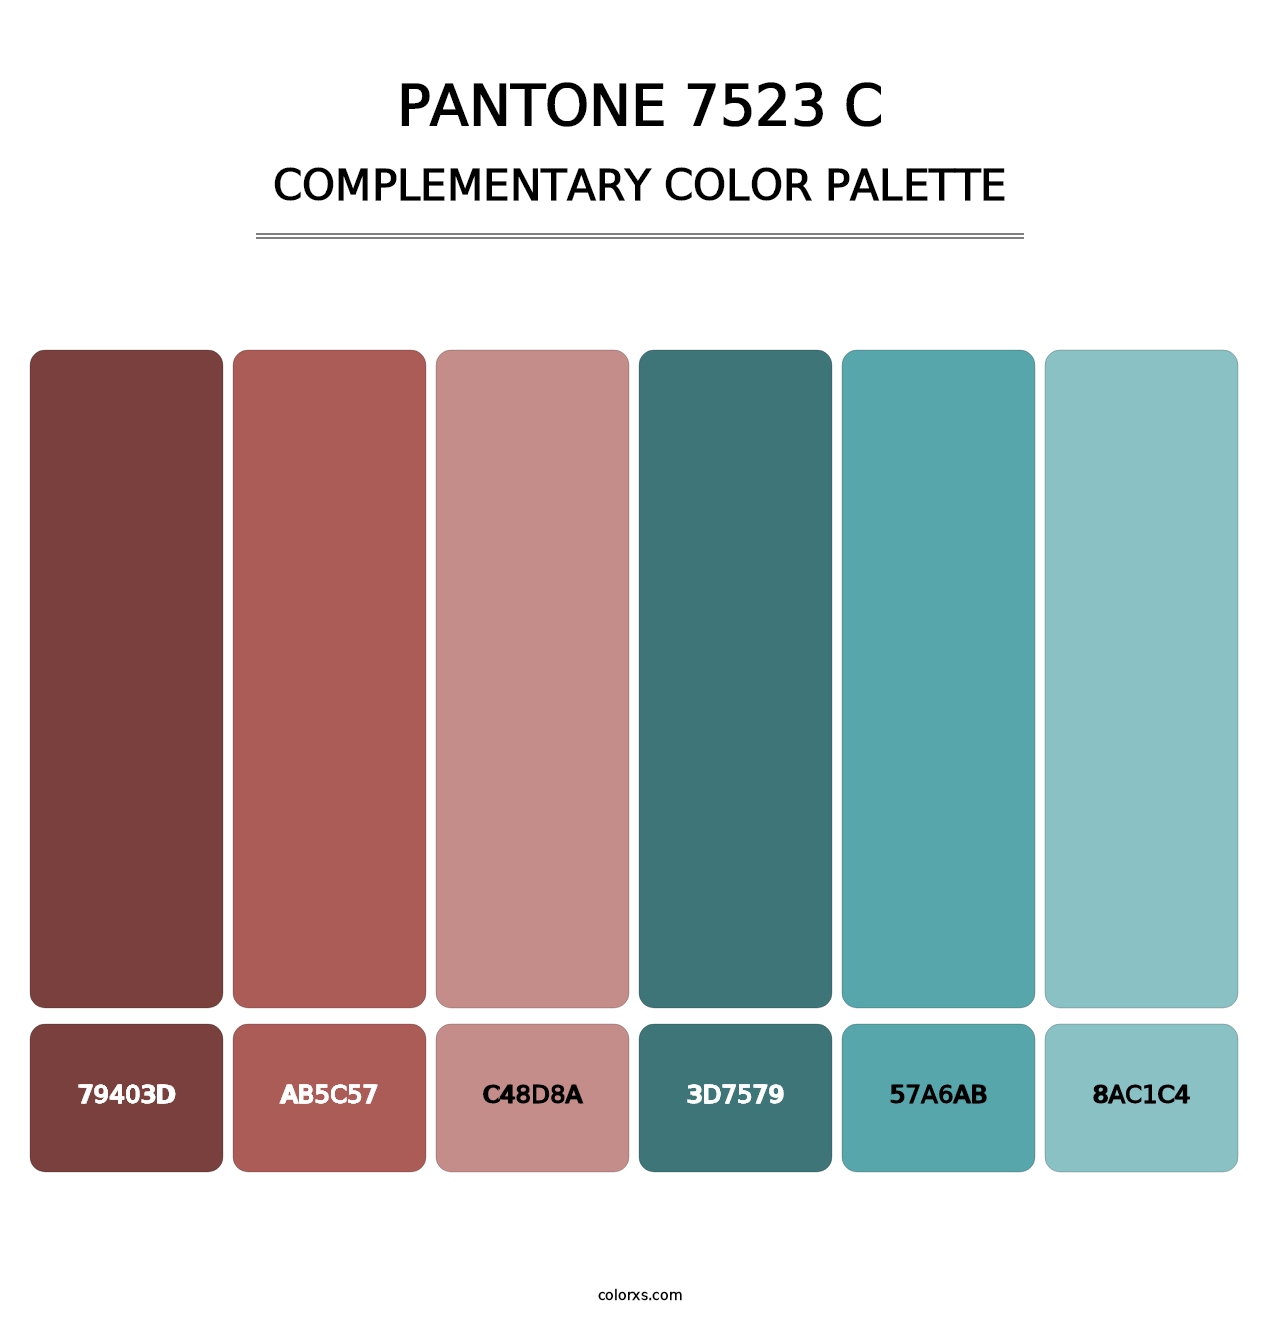 PANTONE 7523 C - Complementary Color Palette